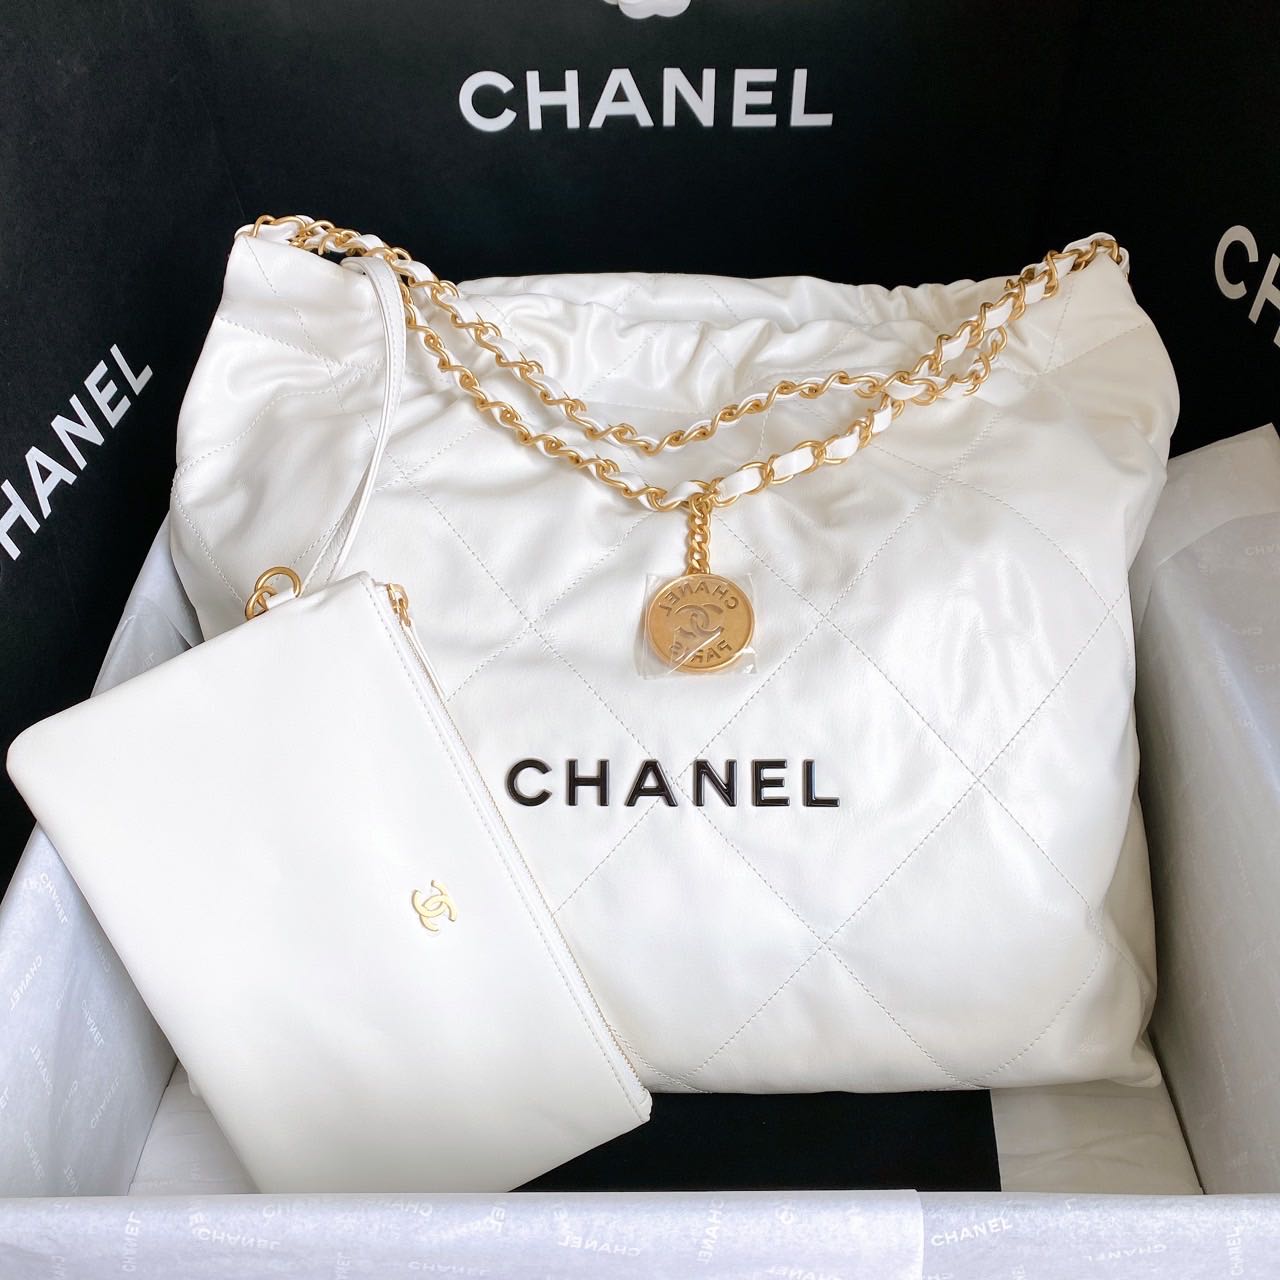 New Chanel bag